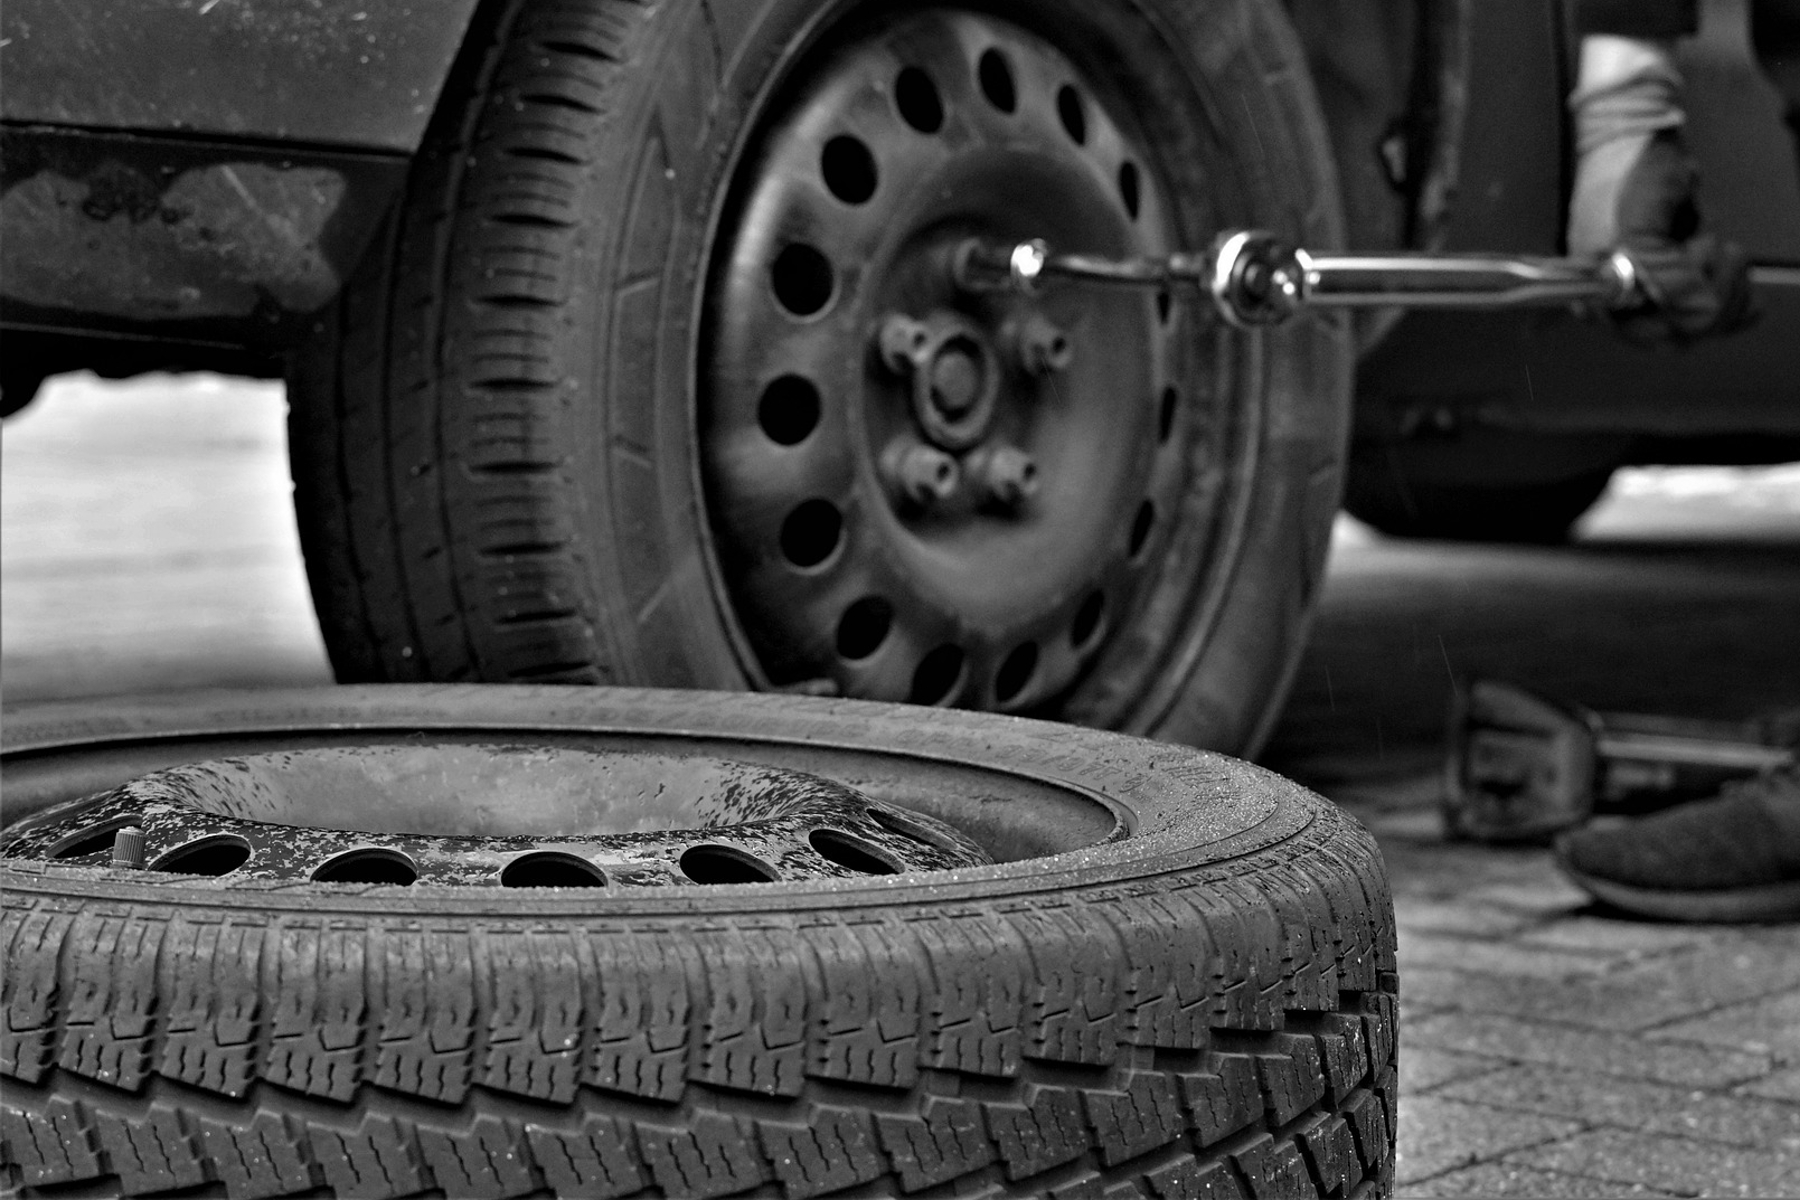 Reifenwechsel: Was muss man beim Reifenwechseln beachten?